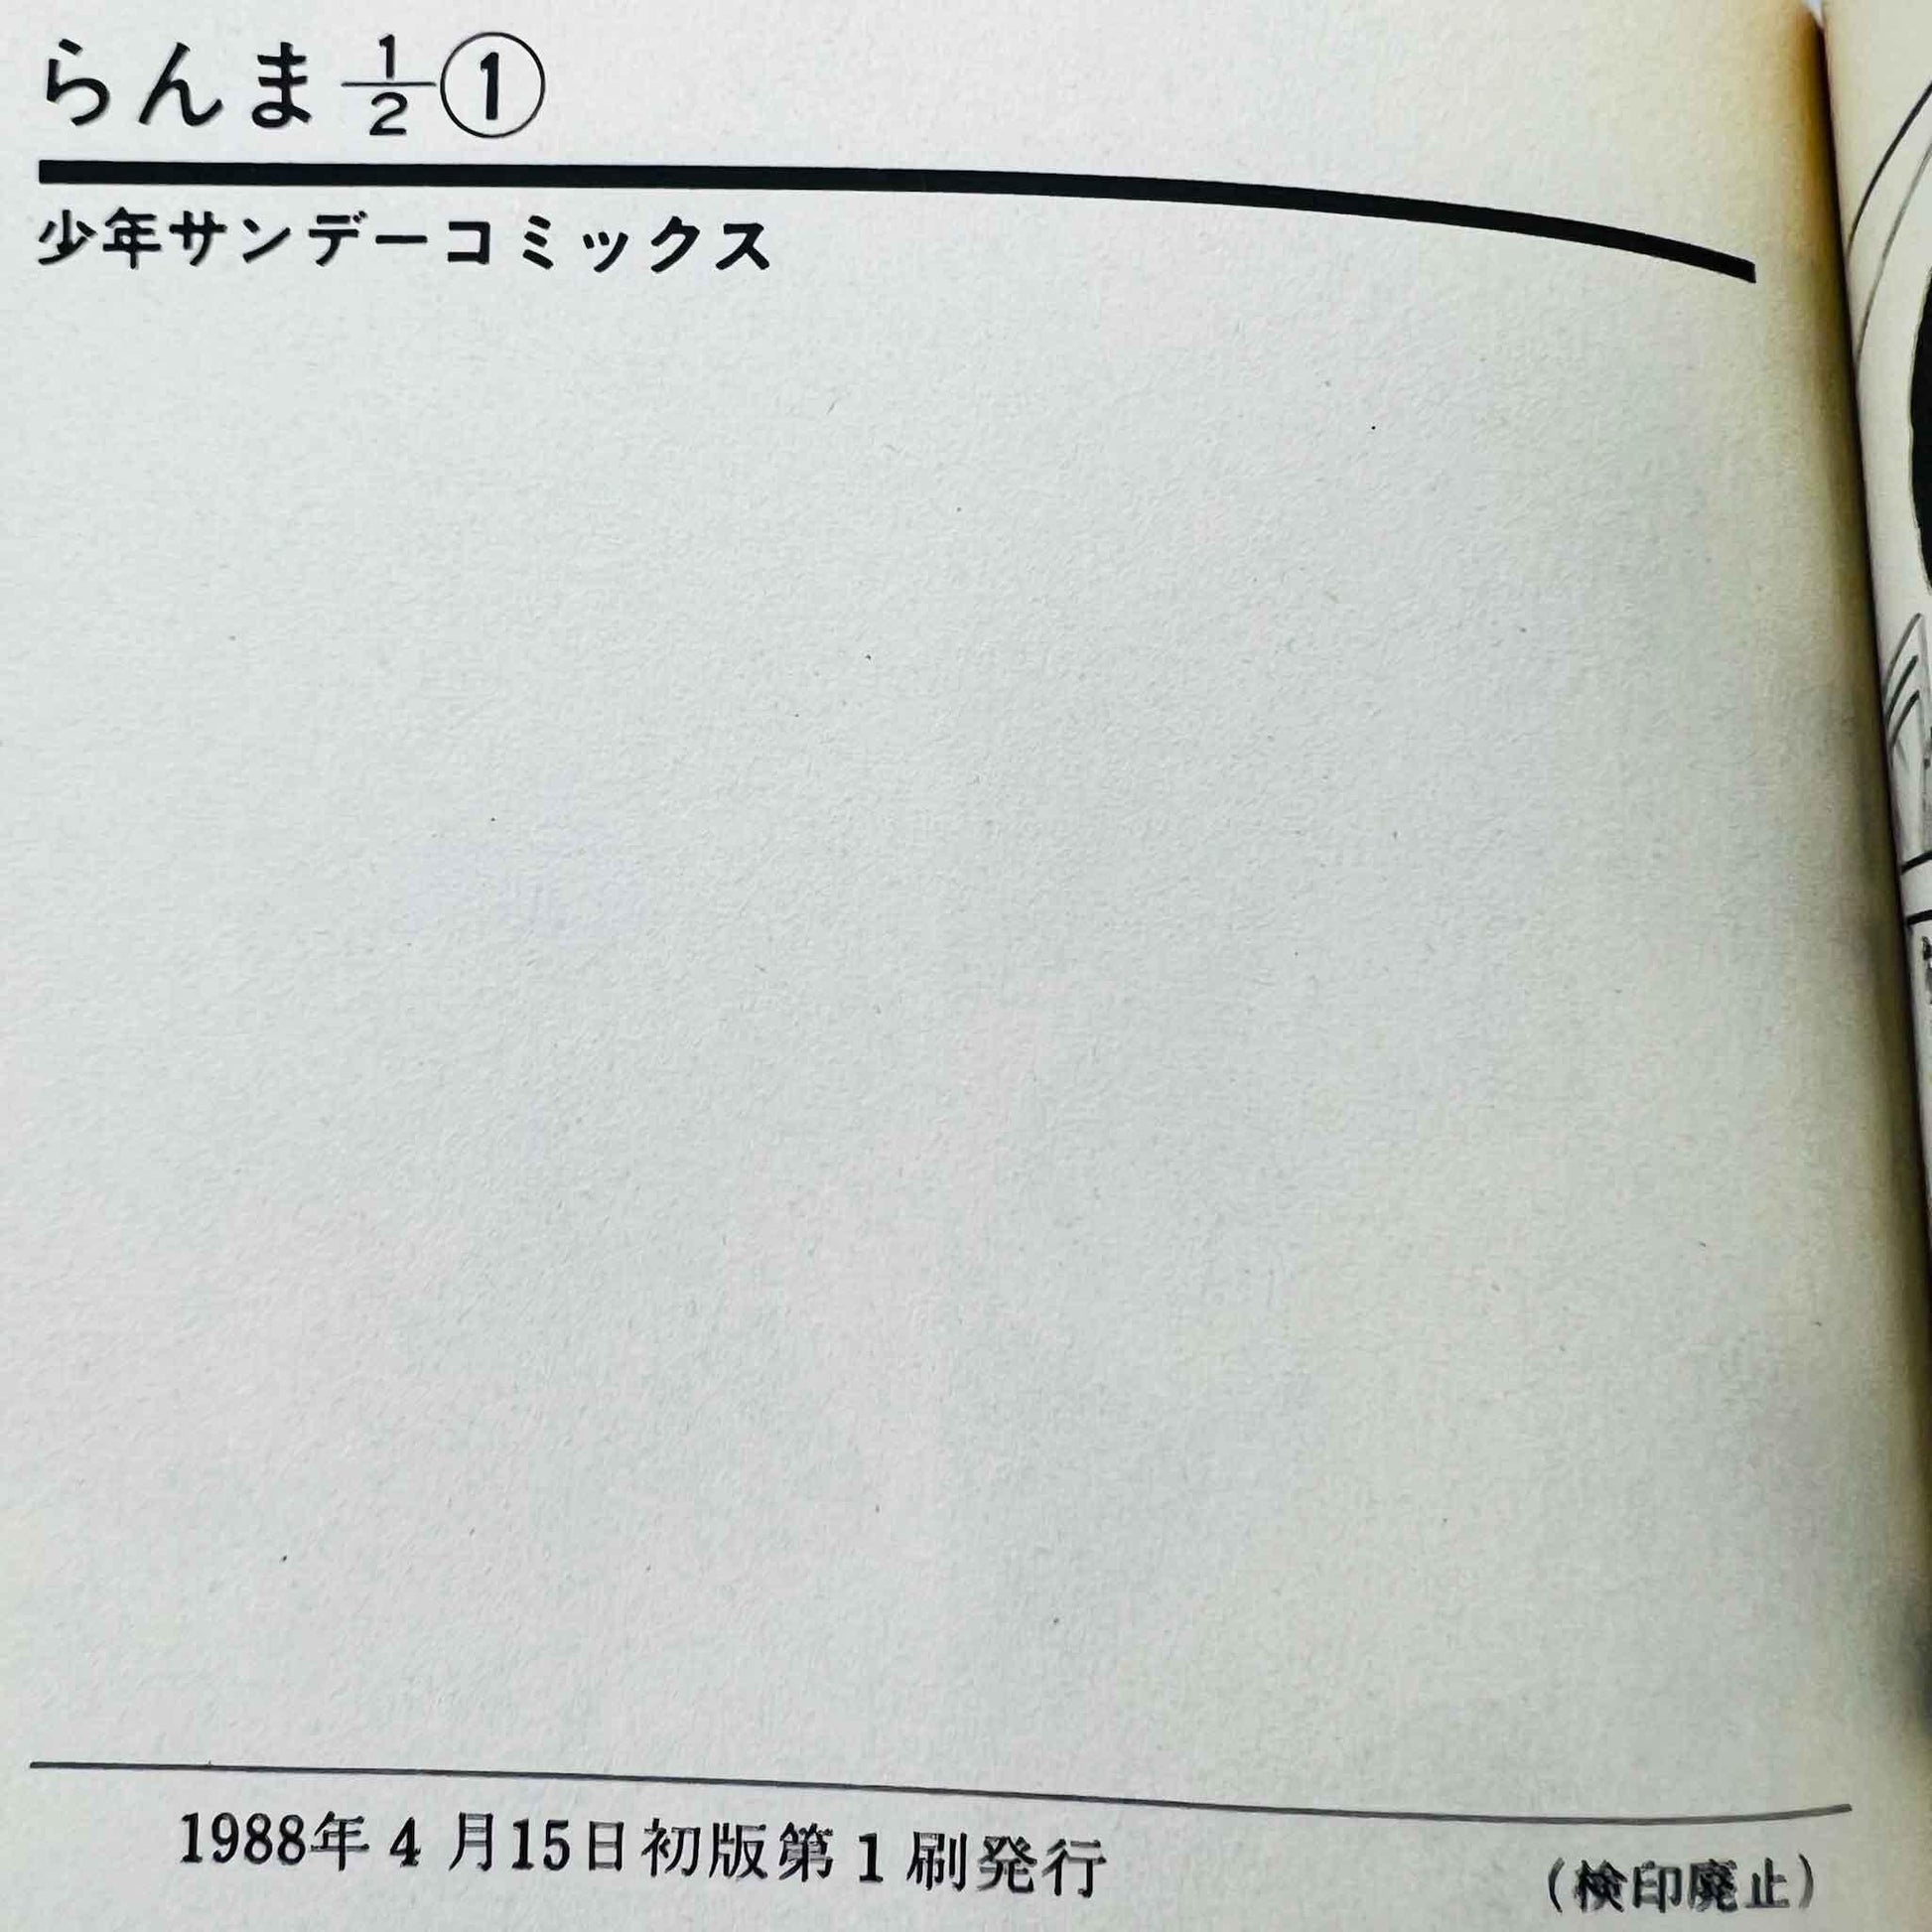 Ranma ½ - Volume 01 02 03 04 - 1stPrint.net - 1st First Print Edition Manga Store - M-RANMA-LOT-001